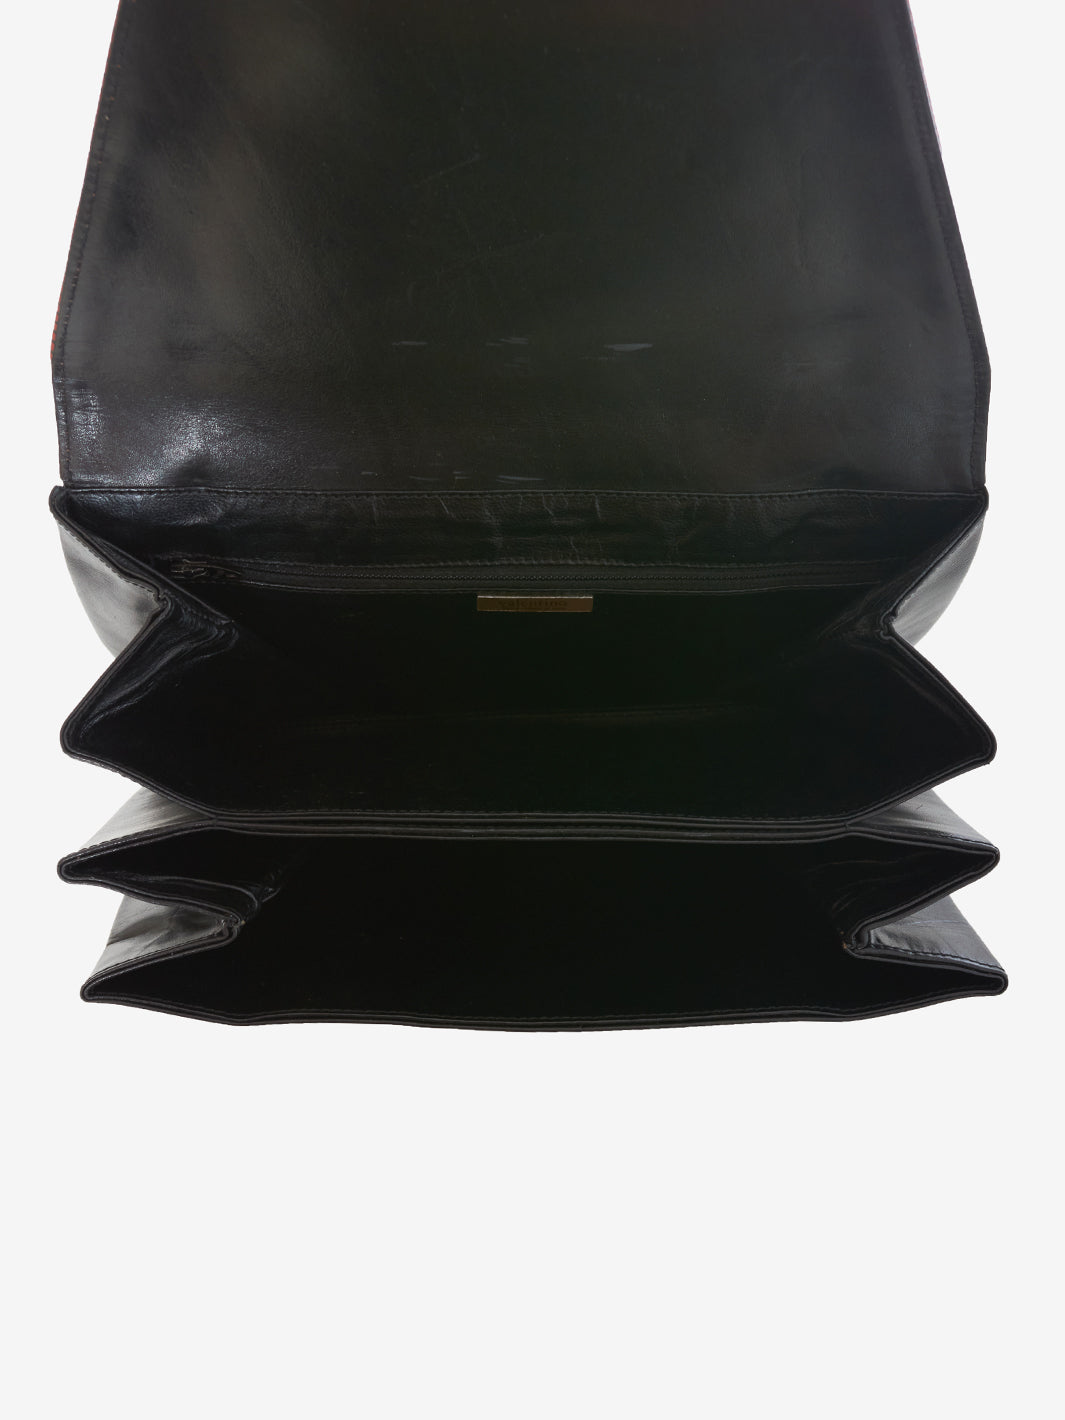 Valentino Black leather clutch bag